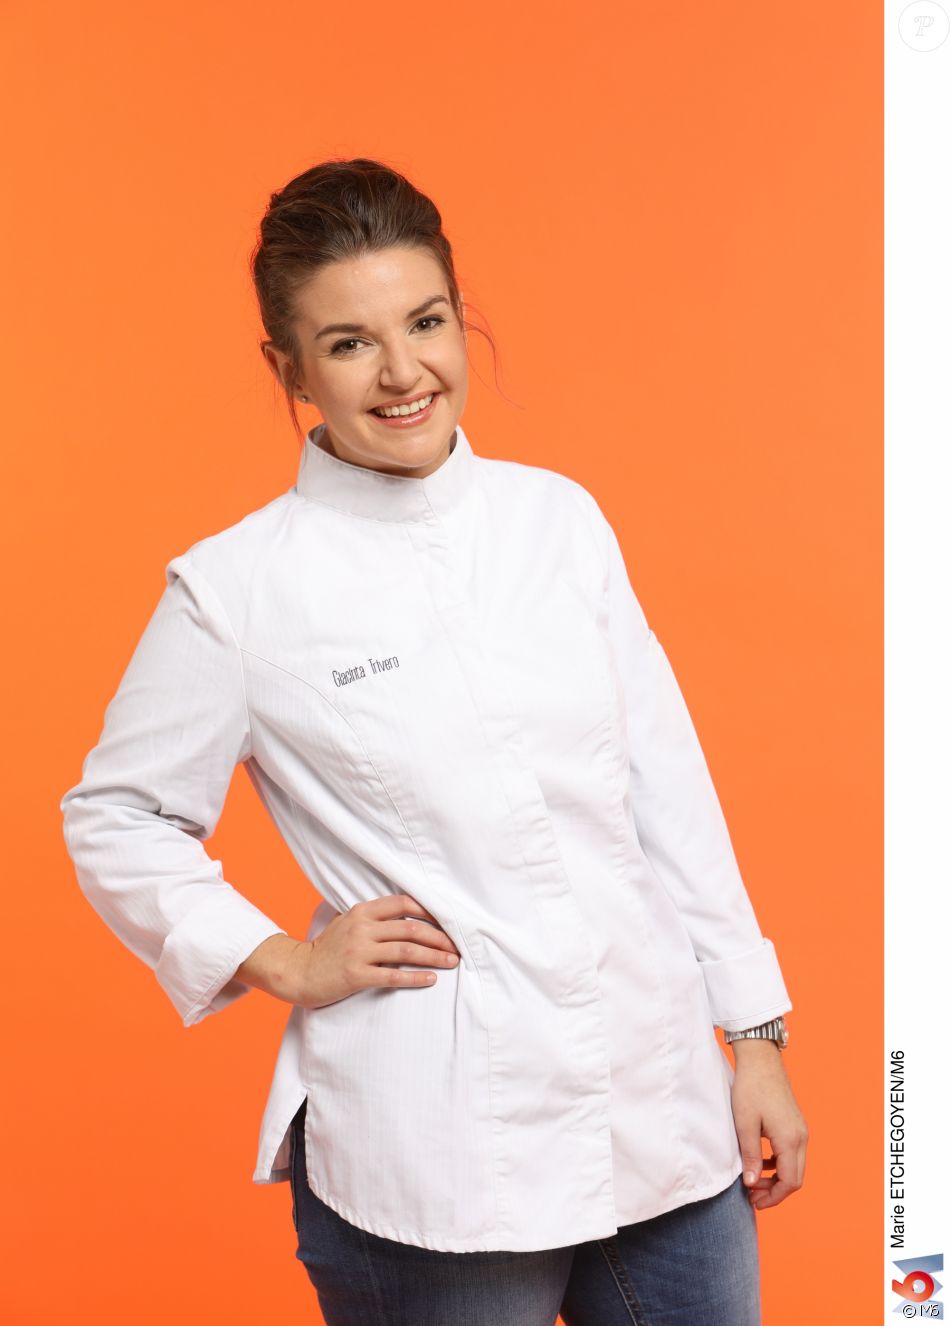 giacinta trivero candidate de top chef 2017